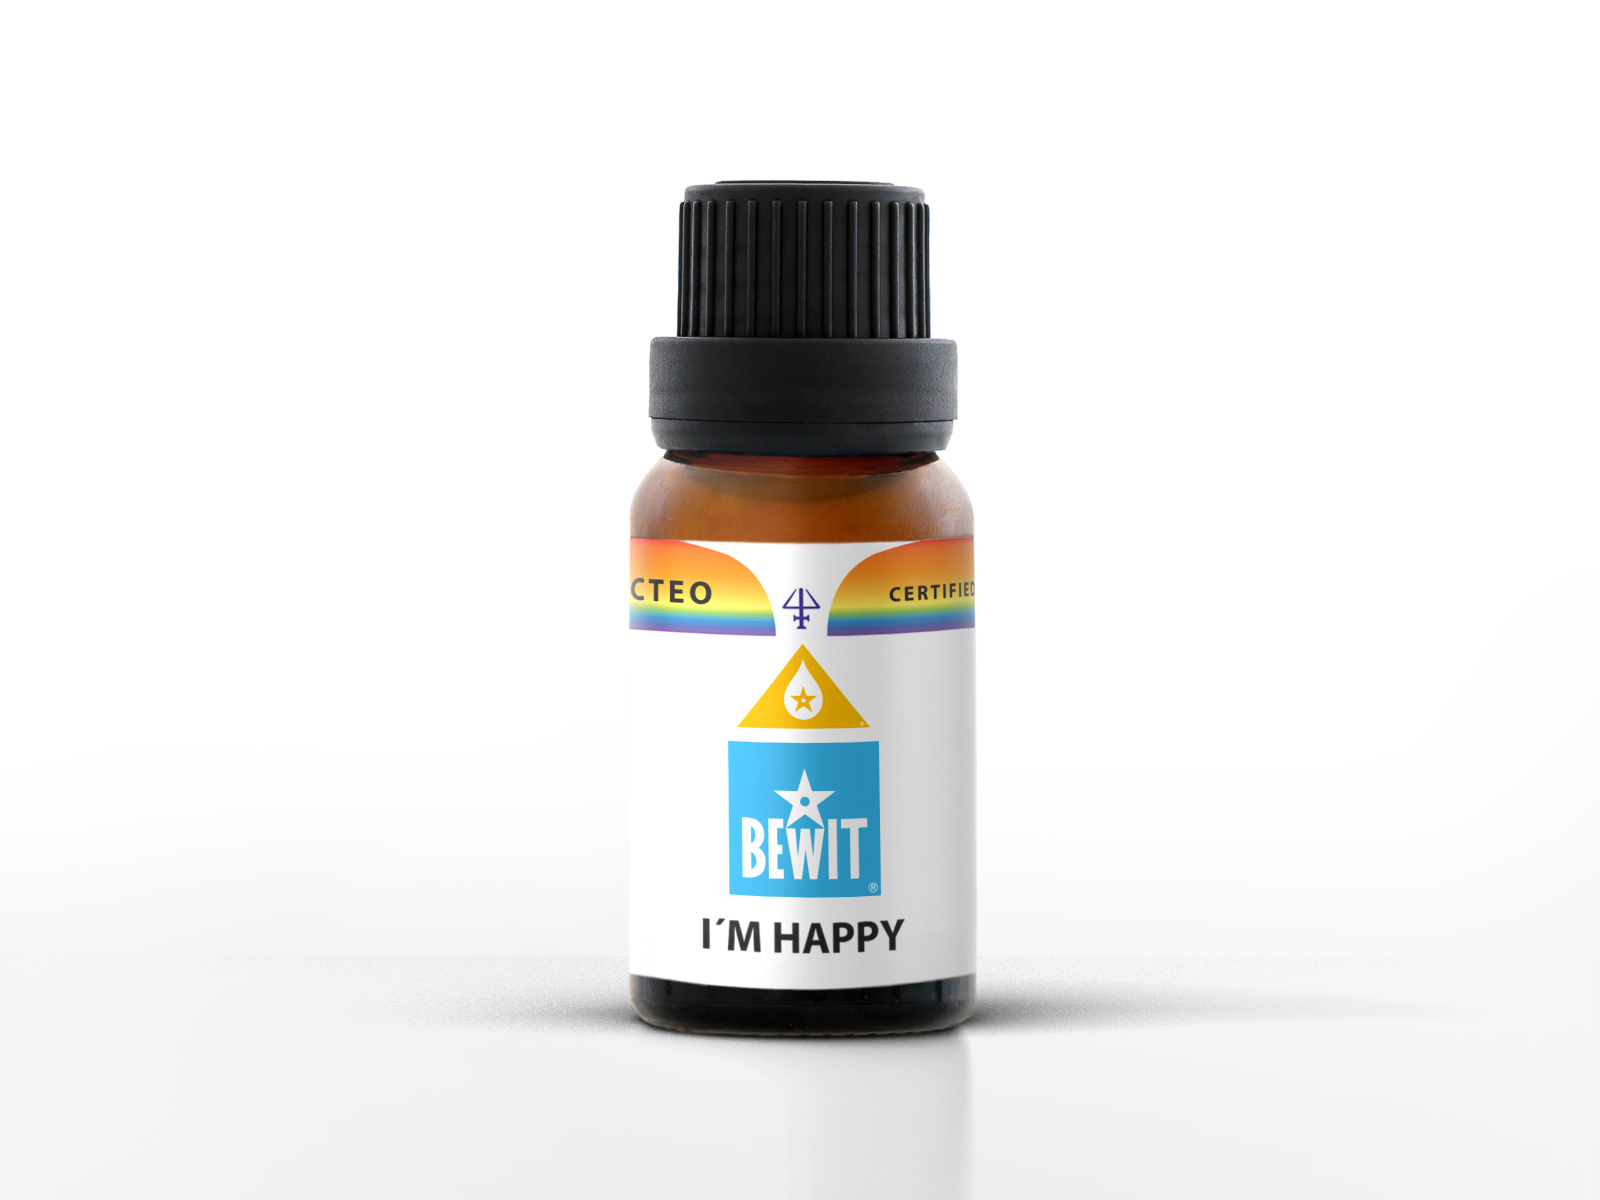 BEWIT I'M HAPPY - A unique blend of the essential oils - 1